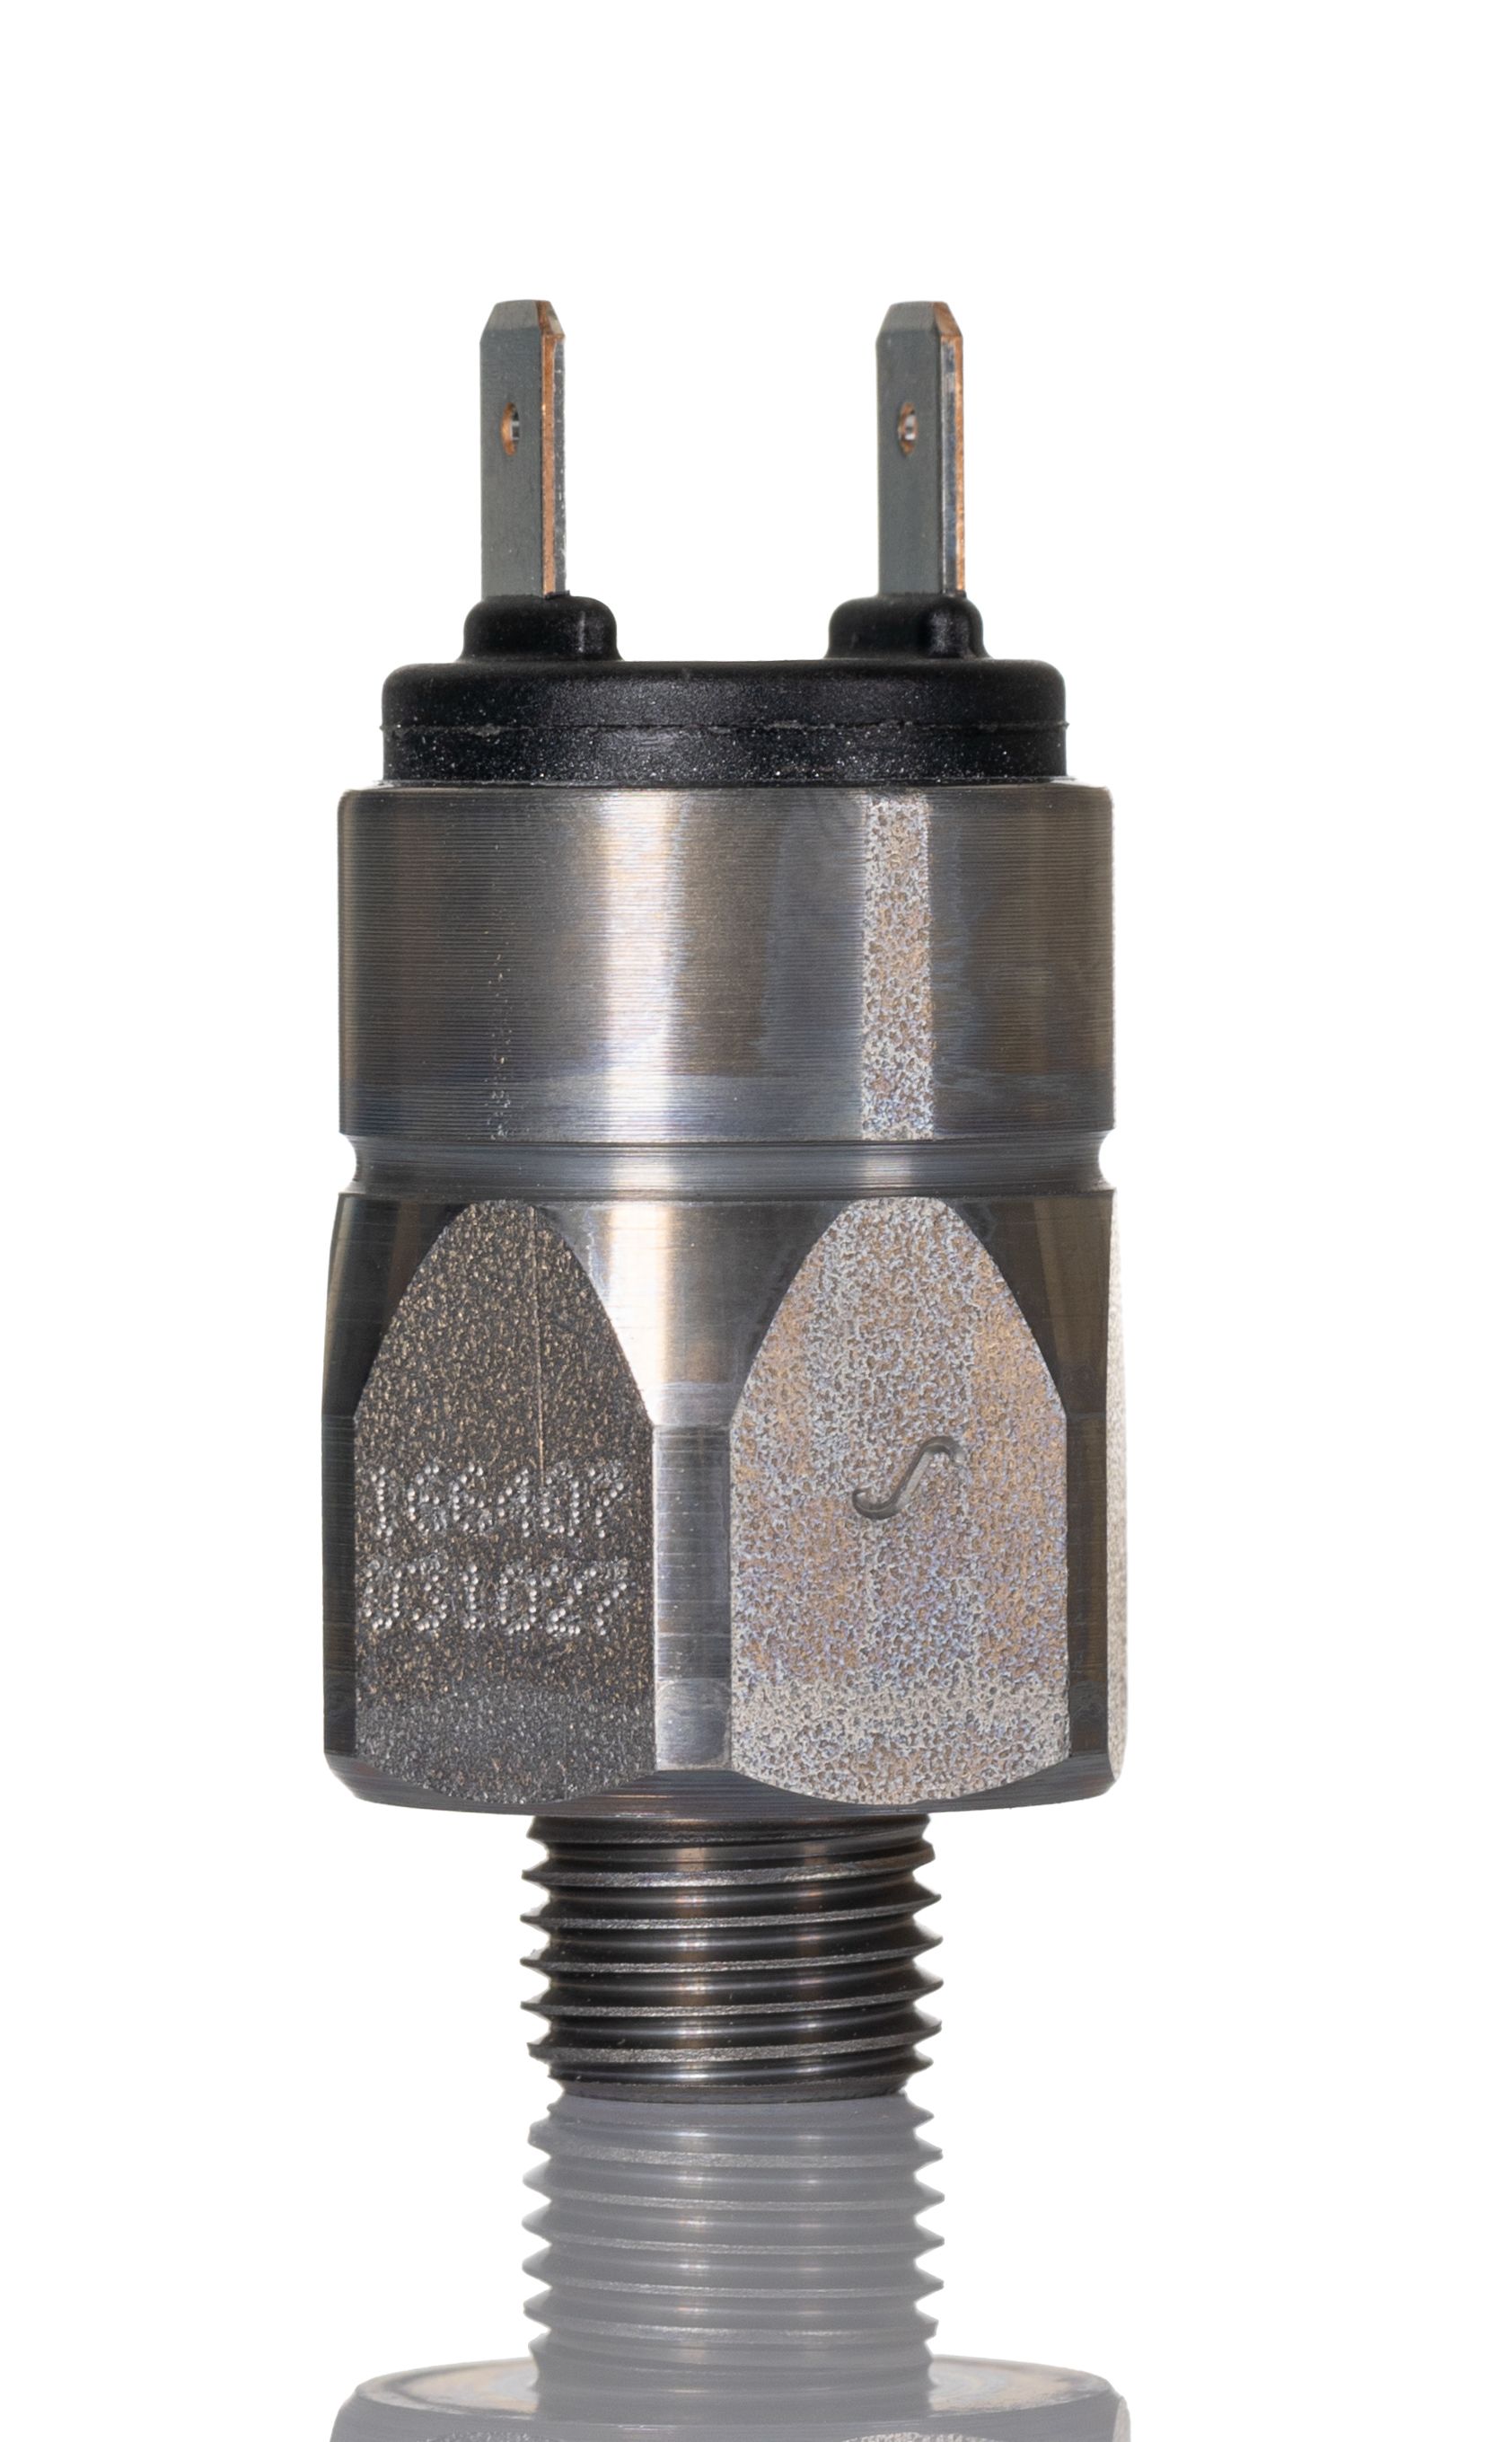 Suco 01664 Series Pressure Sensor, 1bar Min, 10bar Max, Relay Output